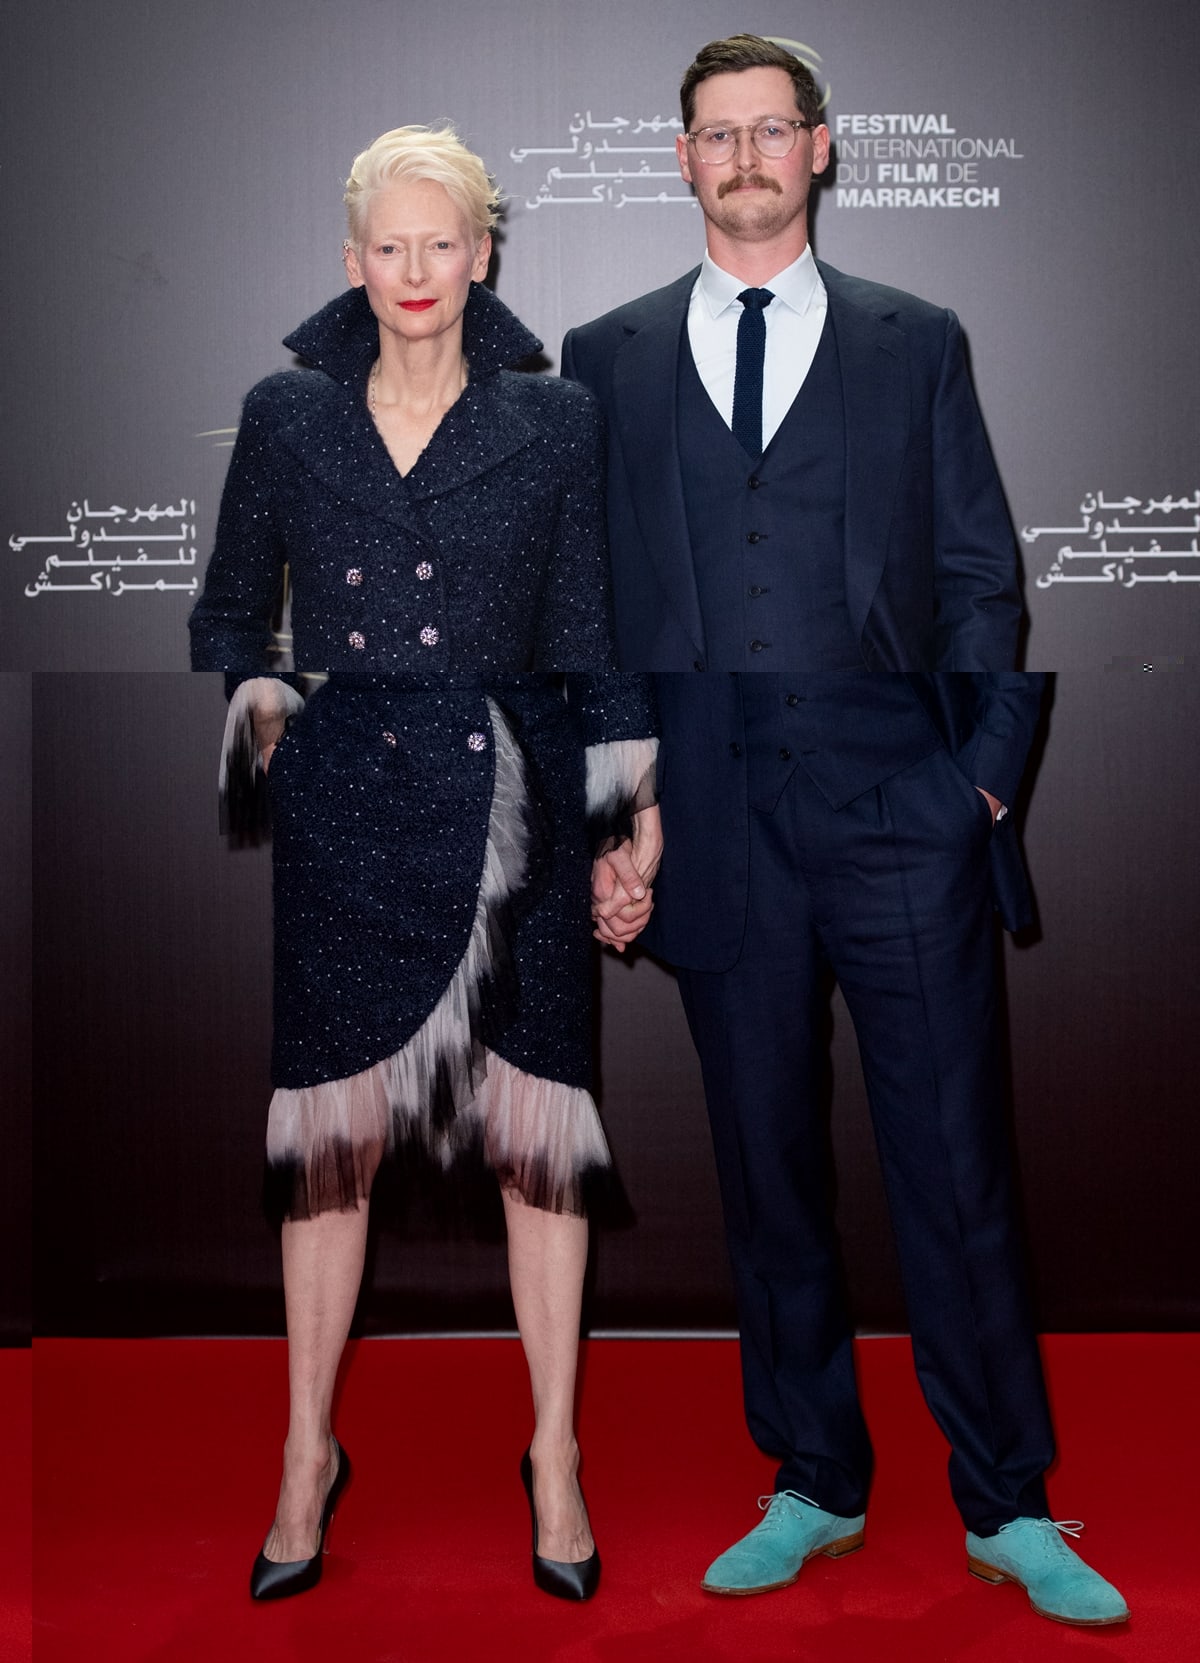 Tilda Swinton poses with her even taller son, Xavier Swinton Byrne, at the "Memory" screening during the 20th Marrakech International Film Festival